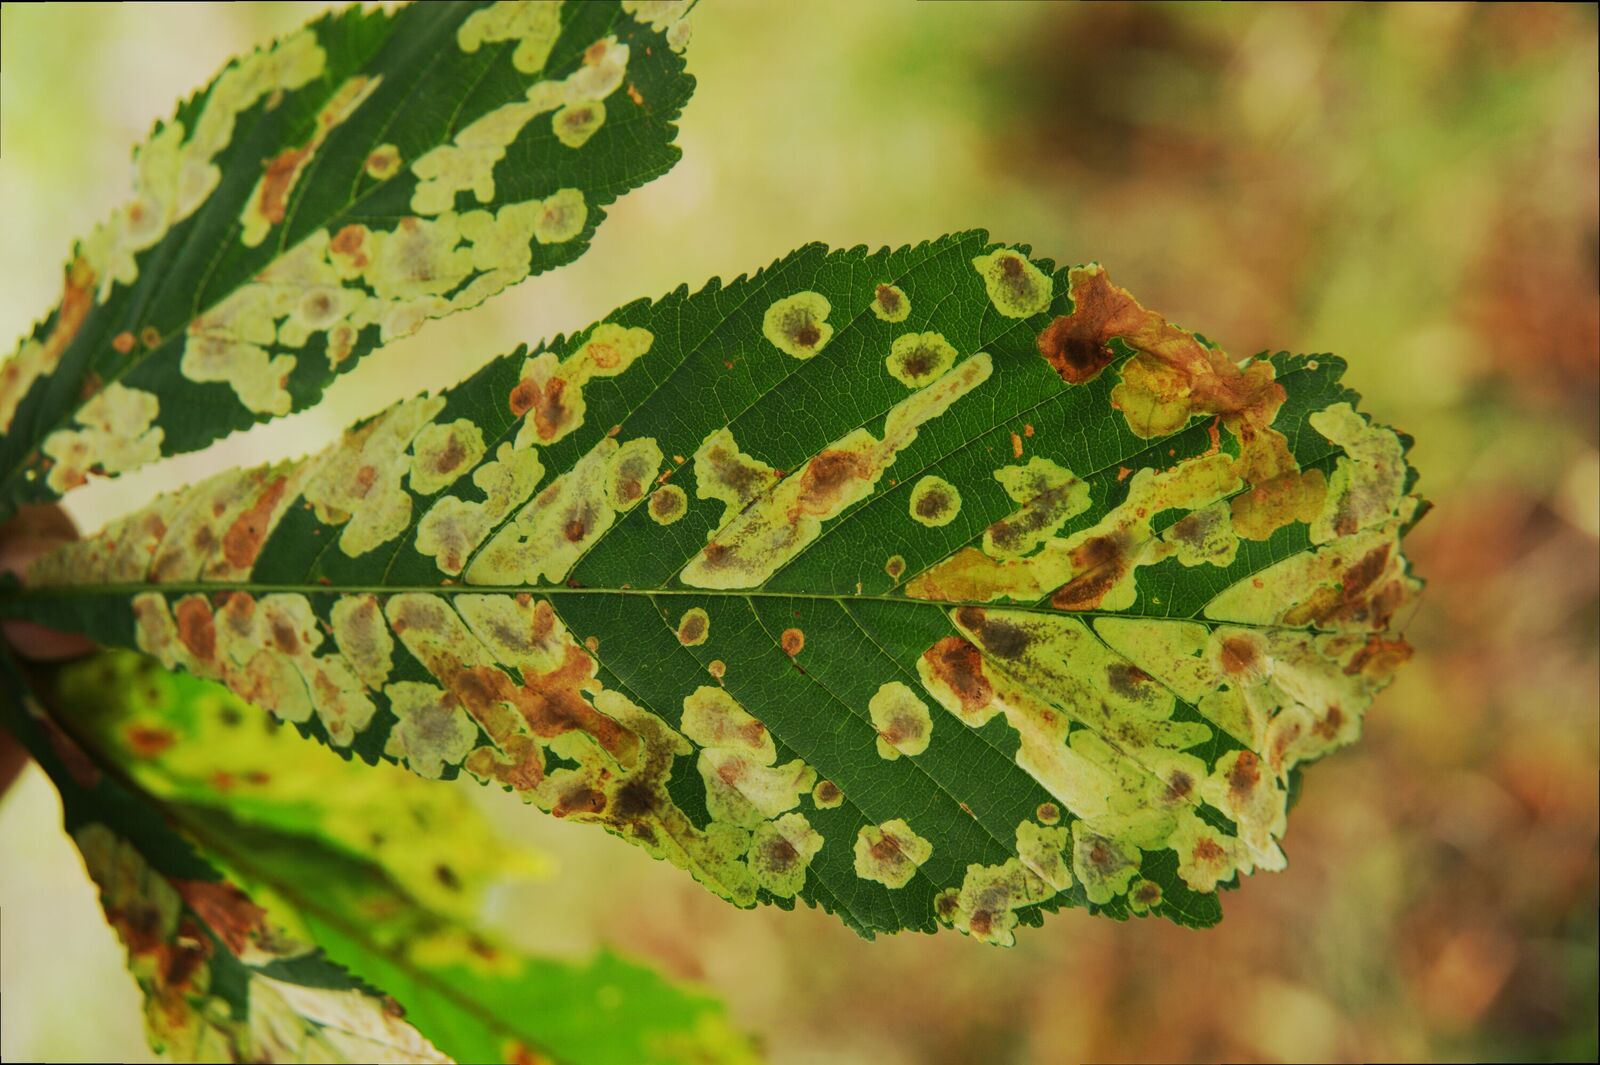 Dark green horse chestnut leaf showing lesions and damage from leaf miner infestation